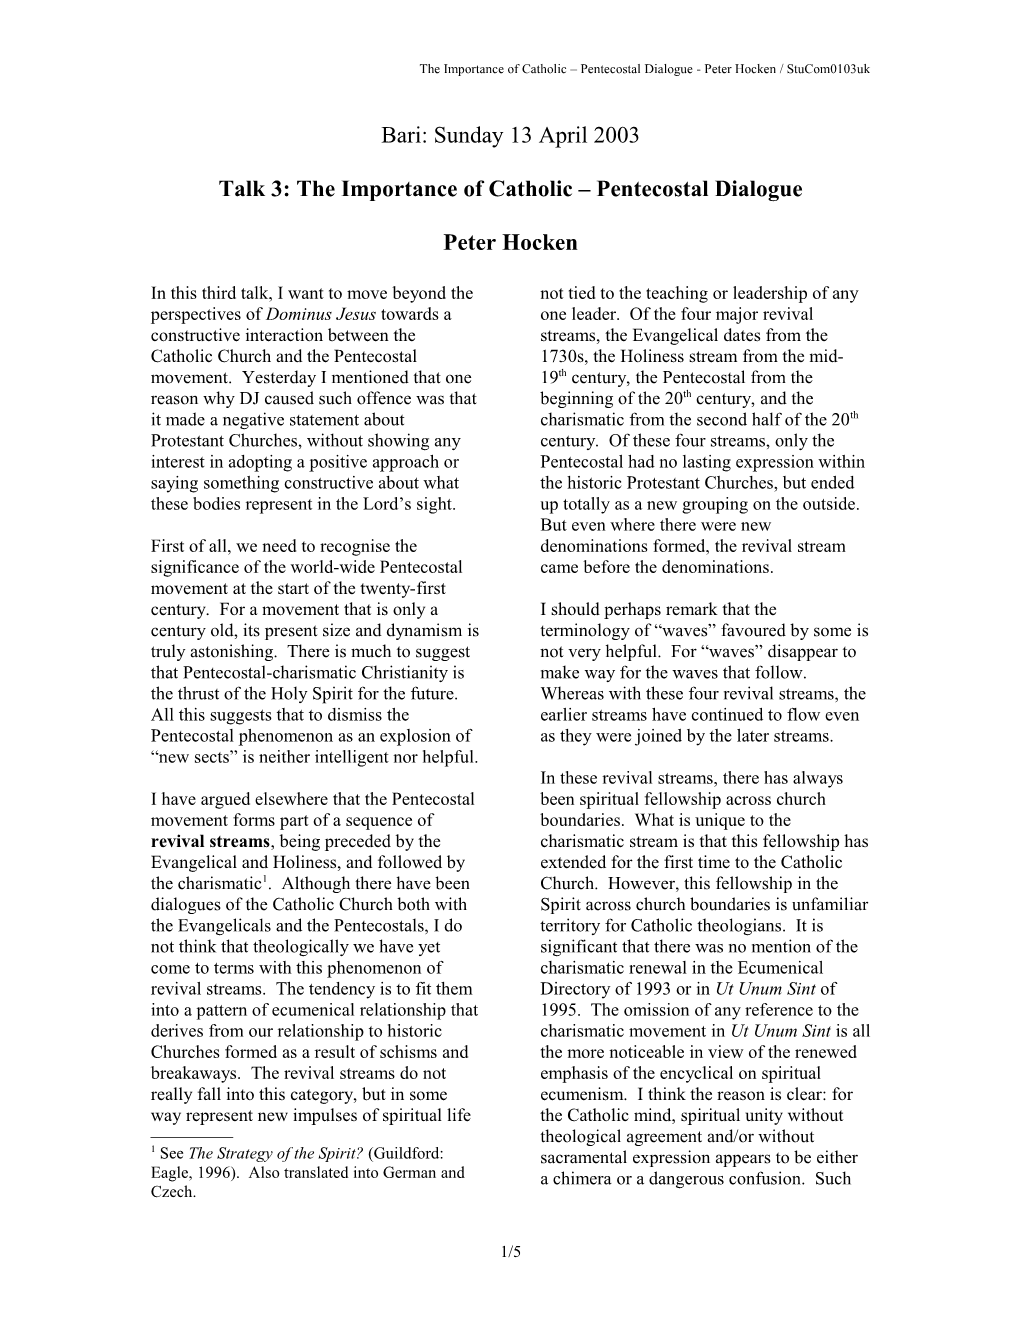 Talk 3: the Importance of Catholic Pentecostal Dialogue